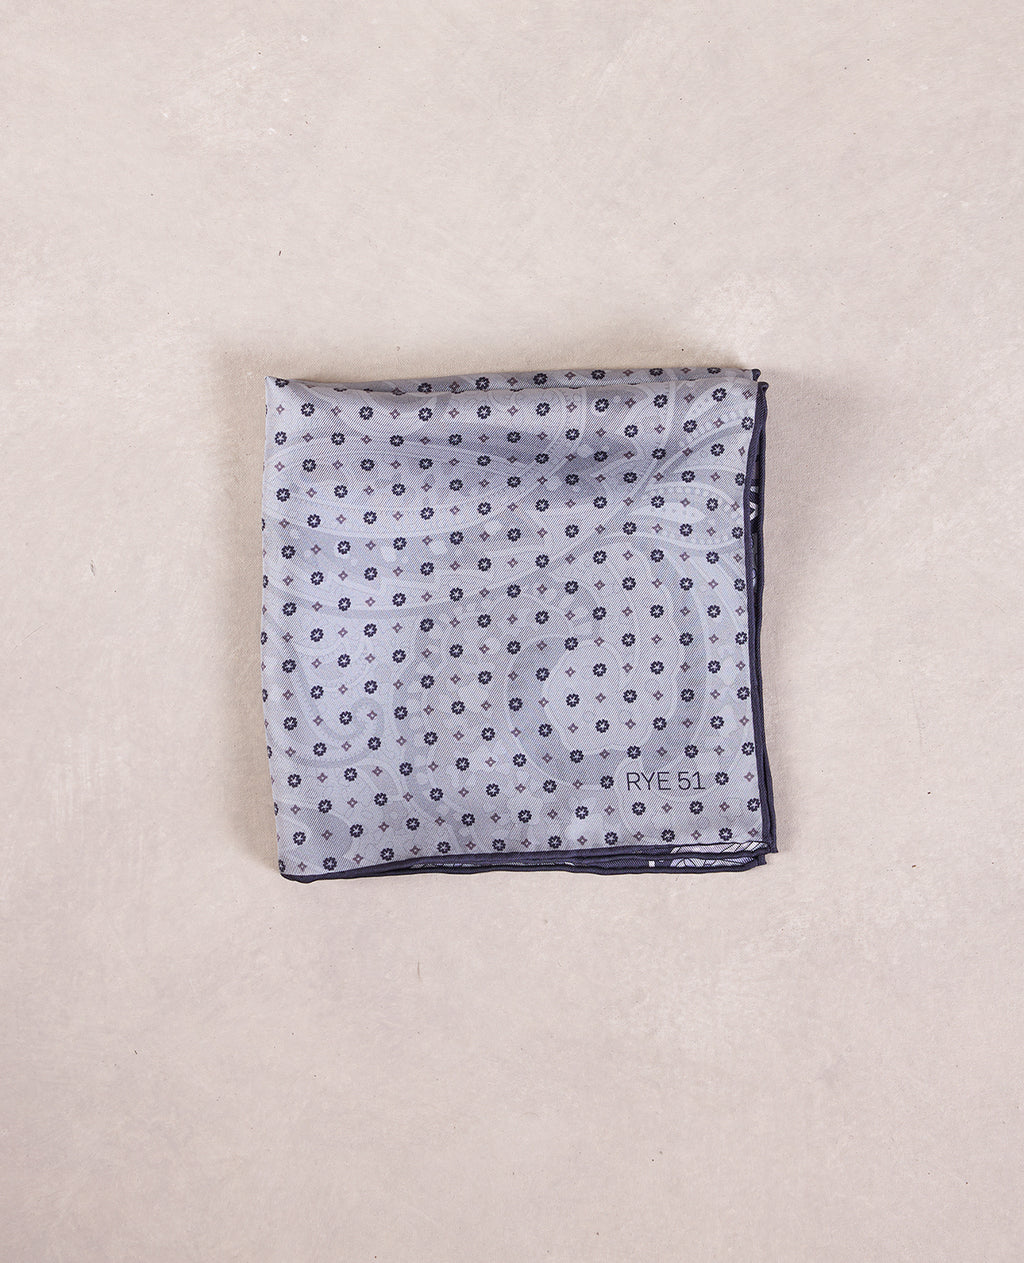 The Silk Pocket Square - Double Face - 100% Silk Pocket Square - Lavender Grey Paisley / Dot